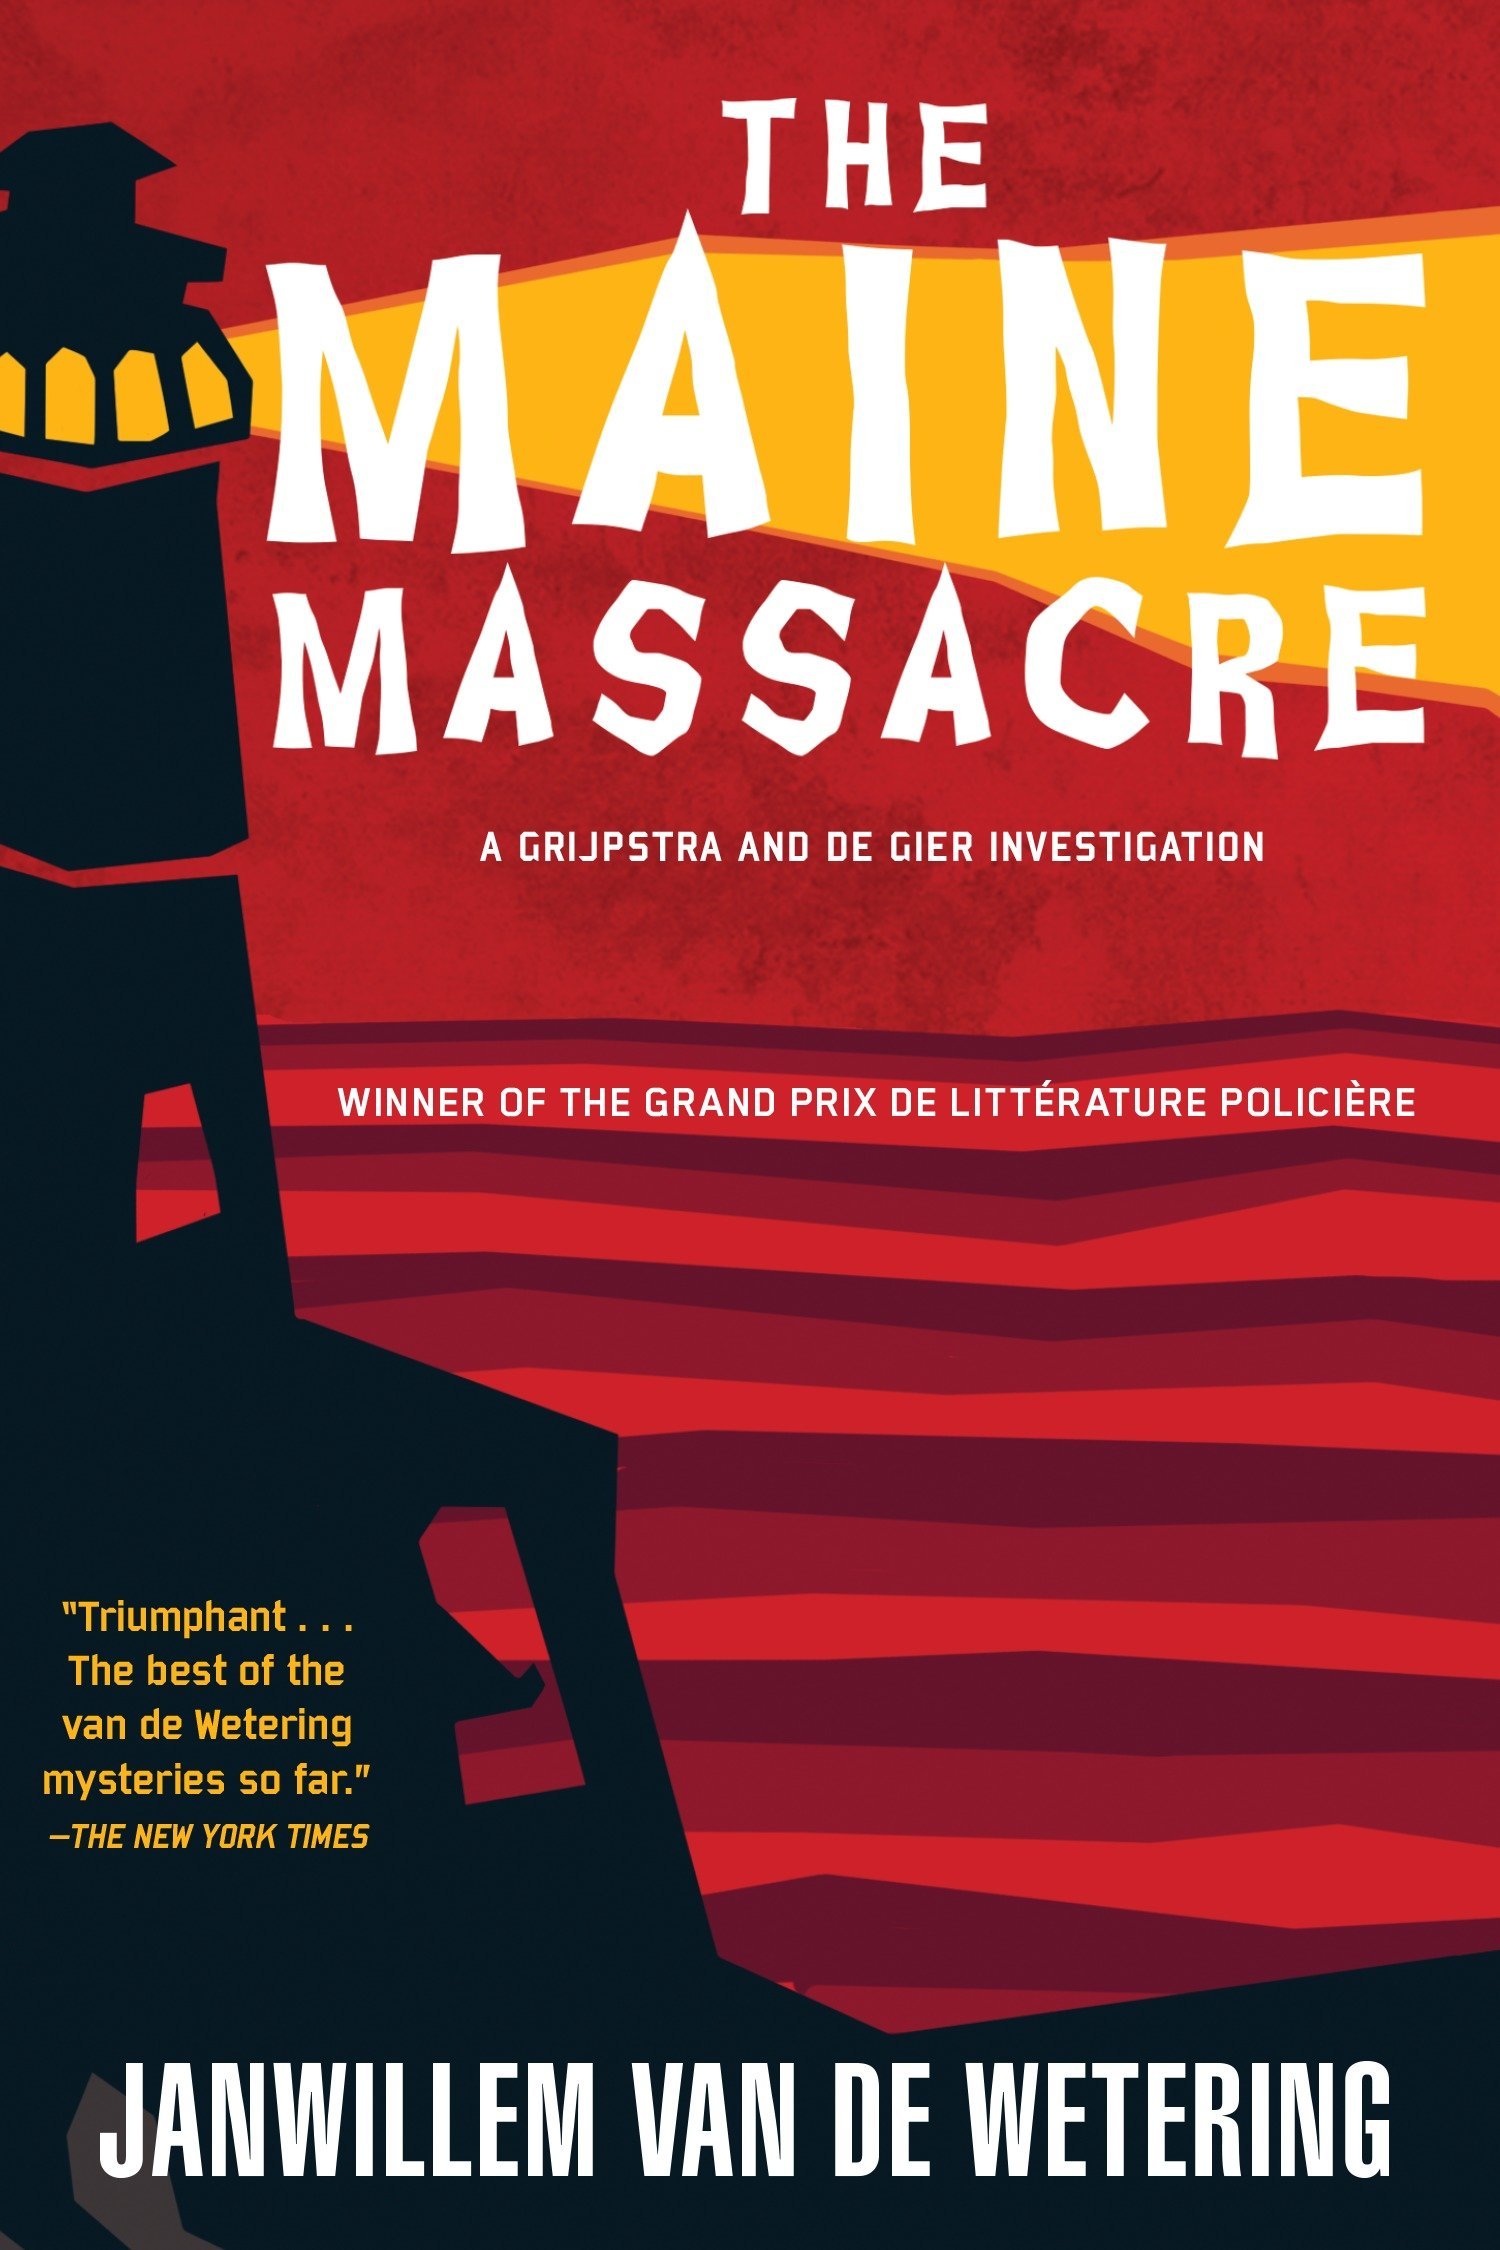 Book Discussion: The Maine Massacre